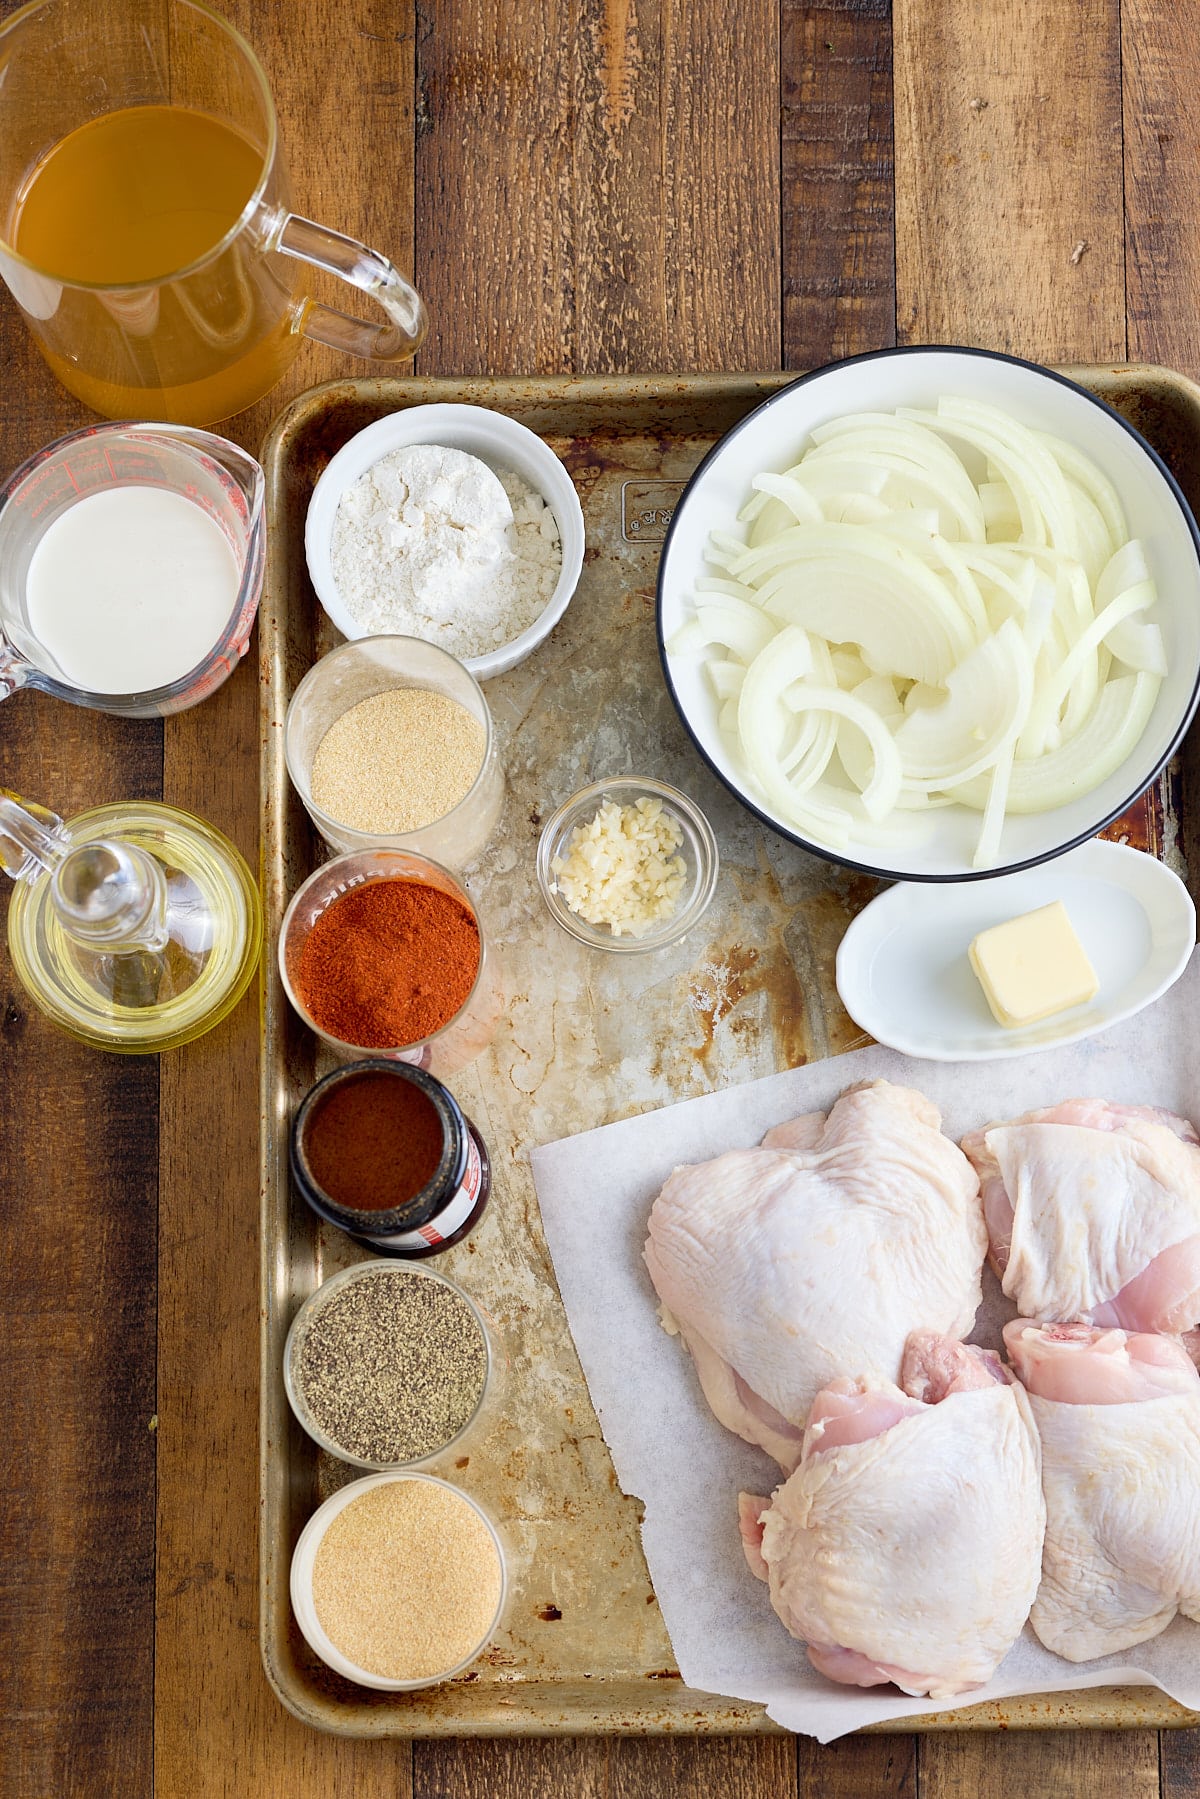 Smothered chicken recipe ingredients